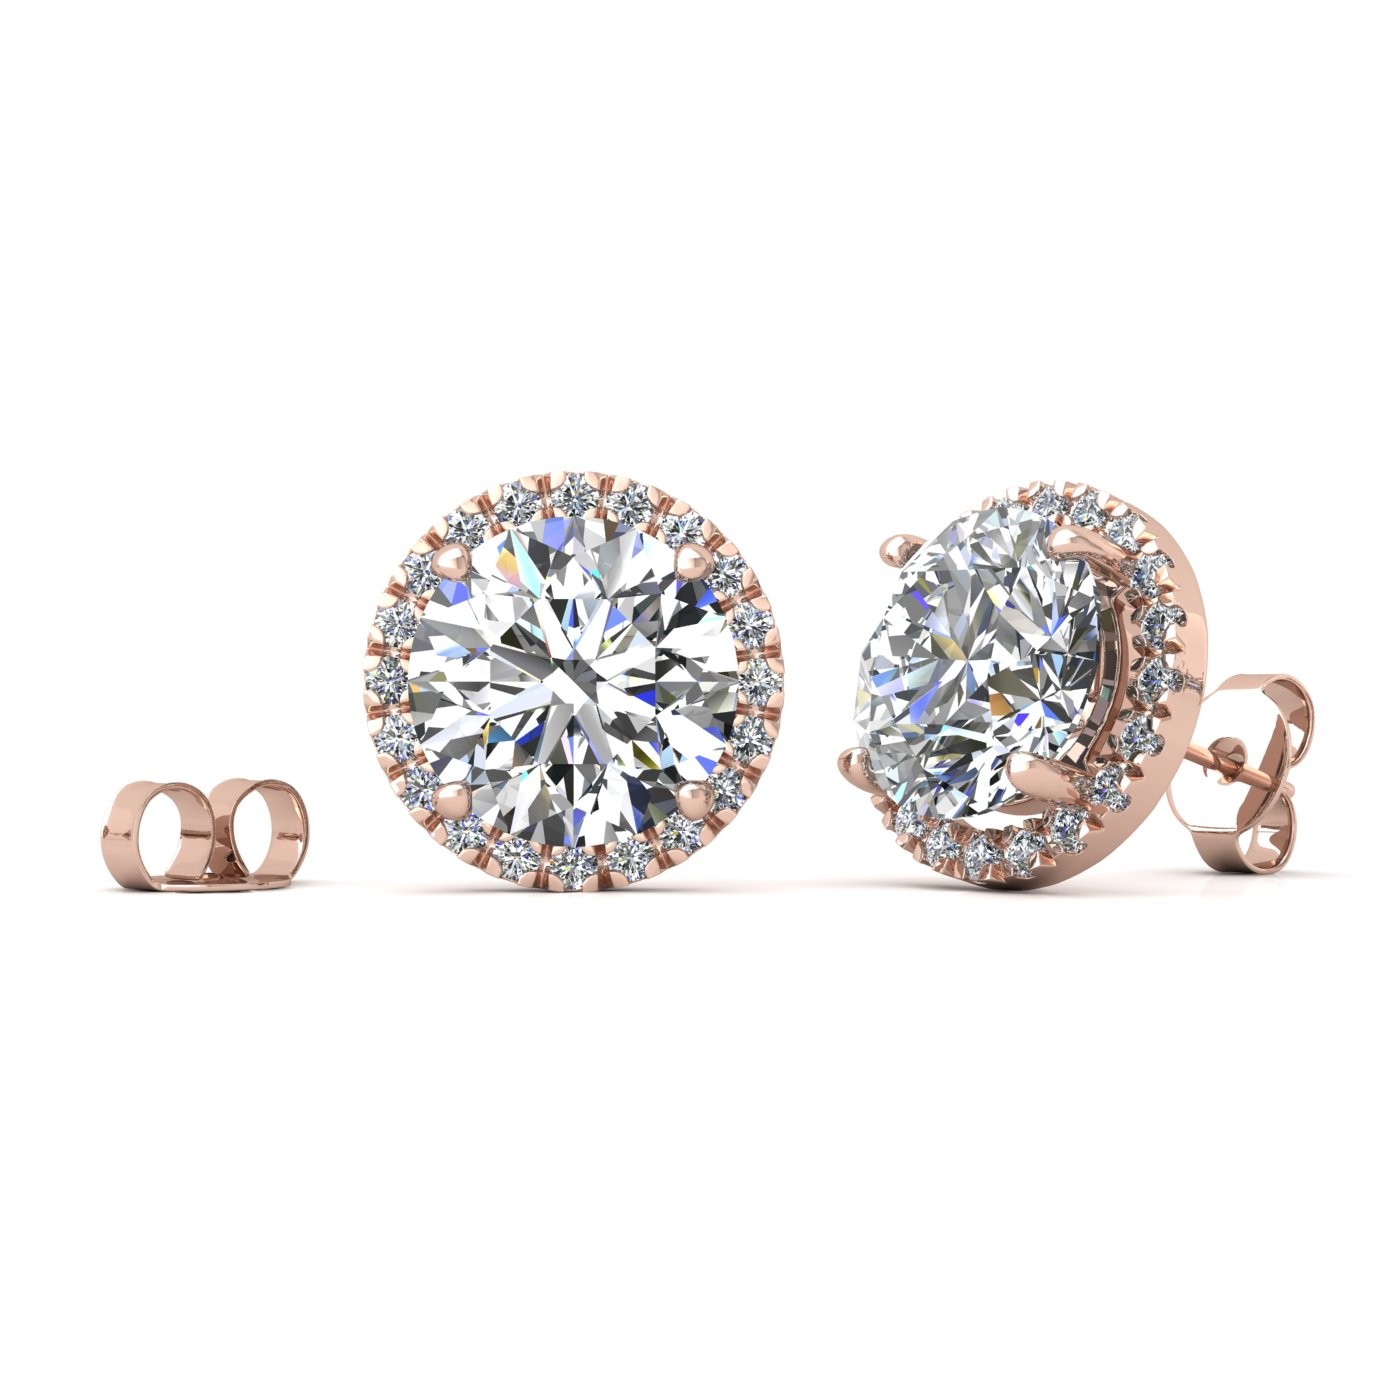 18k rose gold 1,2 ct each (2,4 tcw) 4 prongs round shape diamond earrings with diamond pavÉ set halo Photos & images